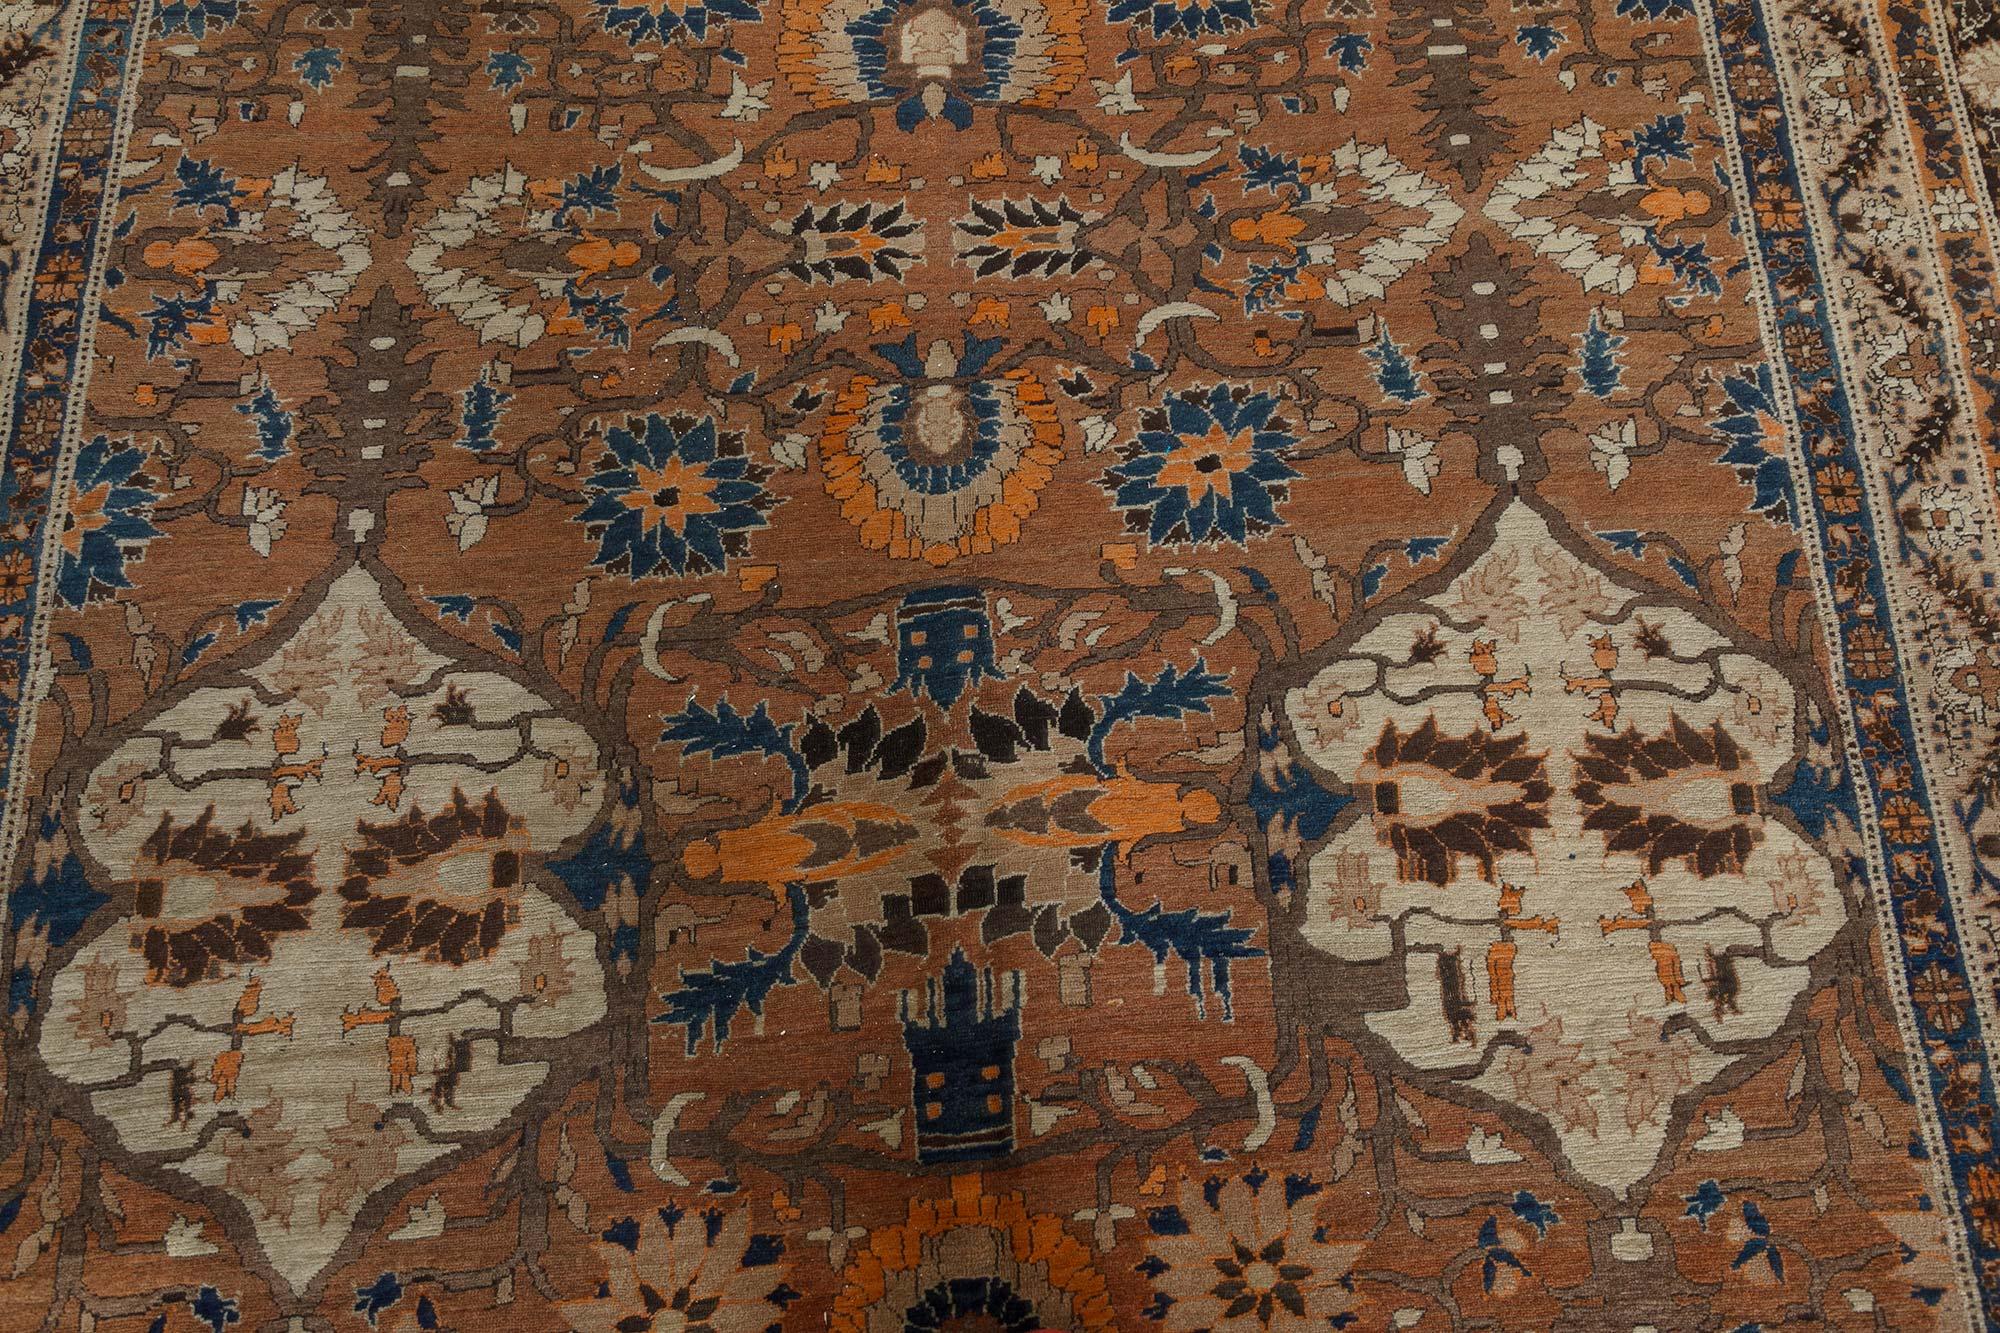 Antique Persian Tabriz handmade wool carpet (Size adjusted)
Size: 8'0